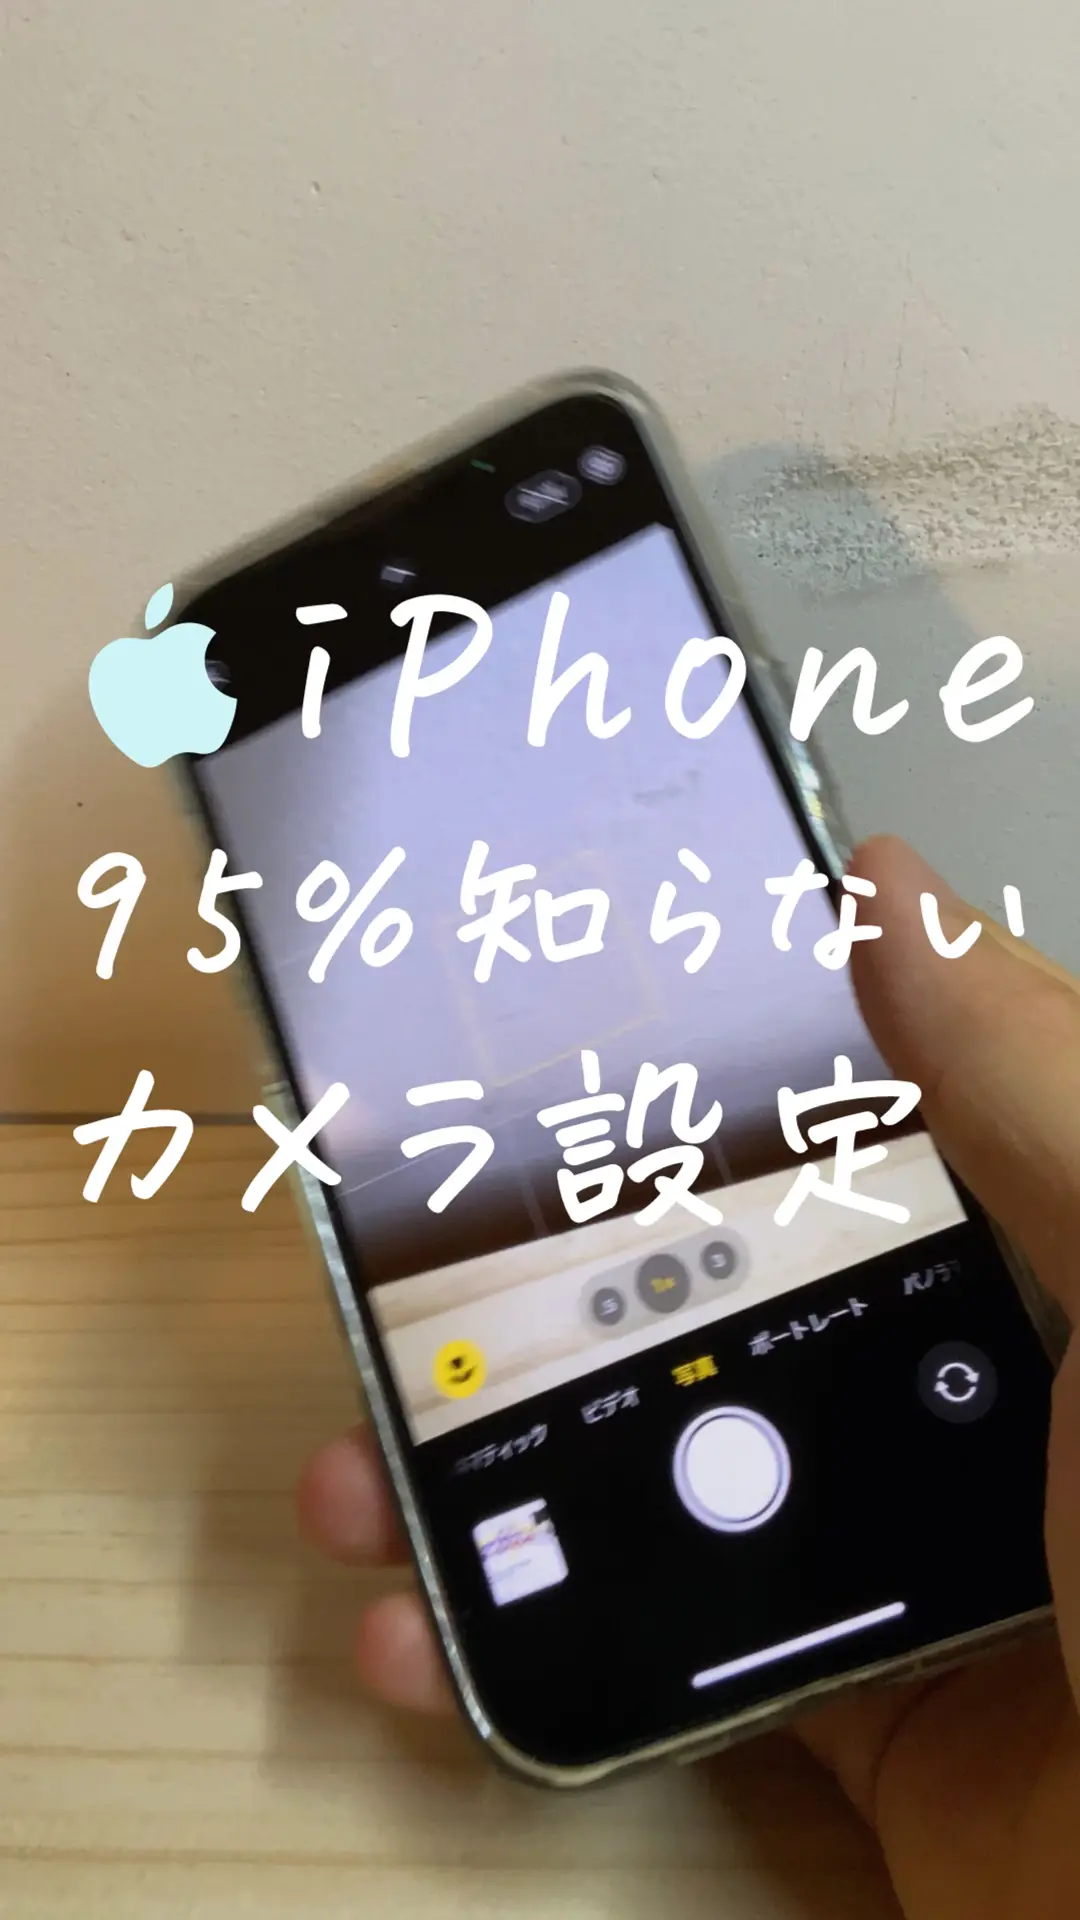 iPhone95%が知らないカメラ設定の画像 (1枚目)